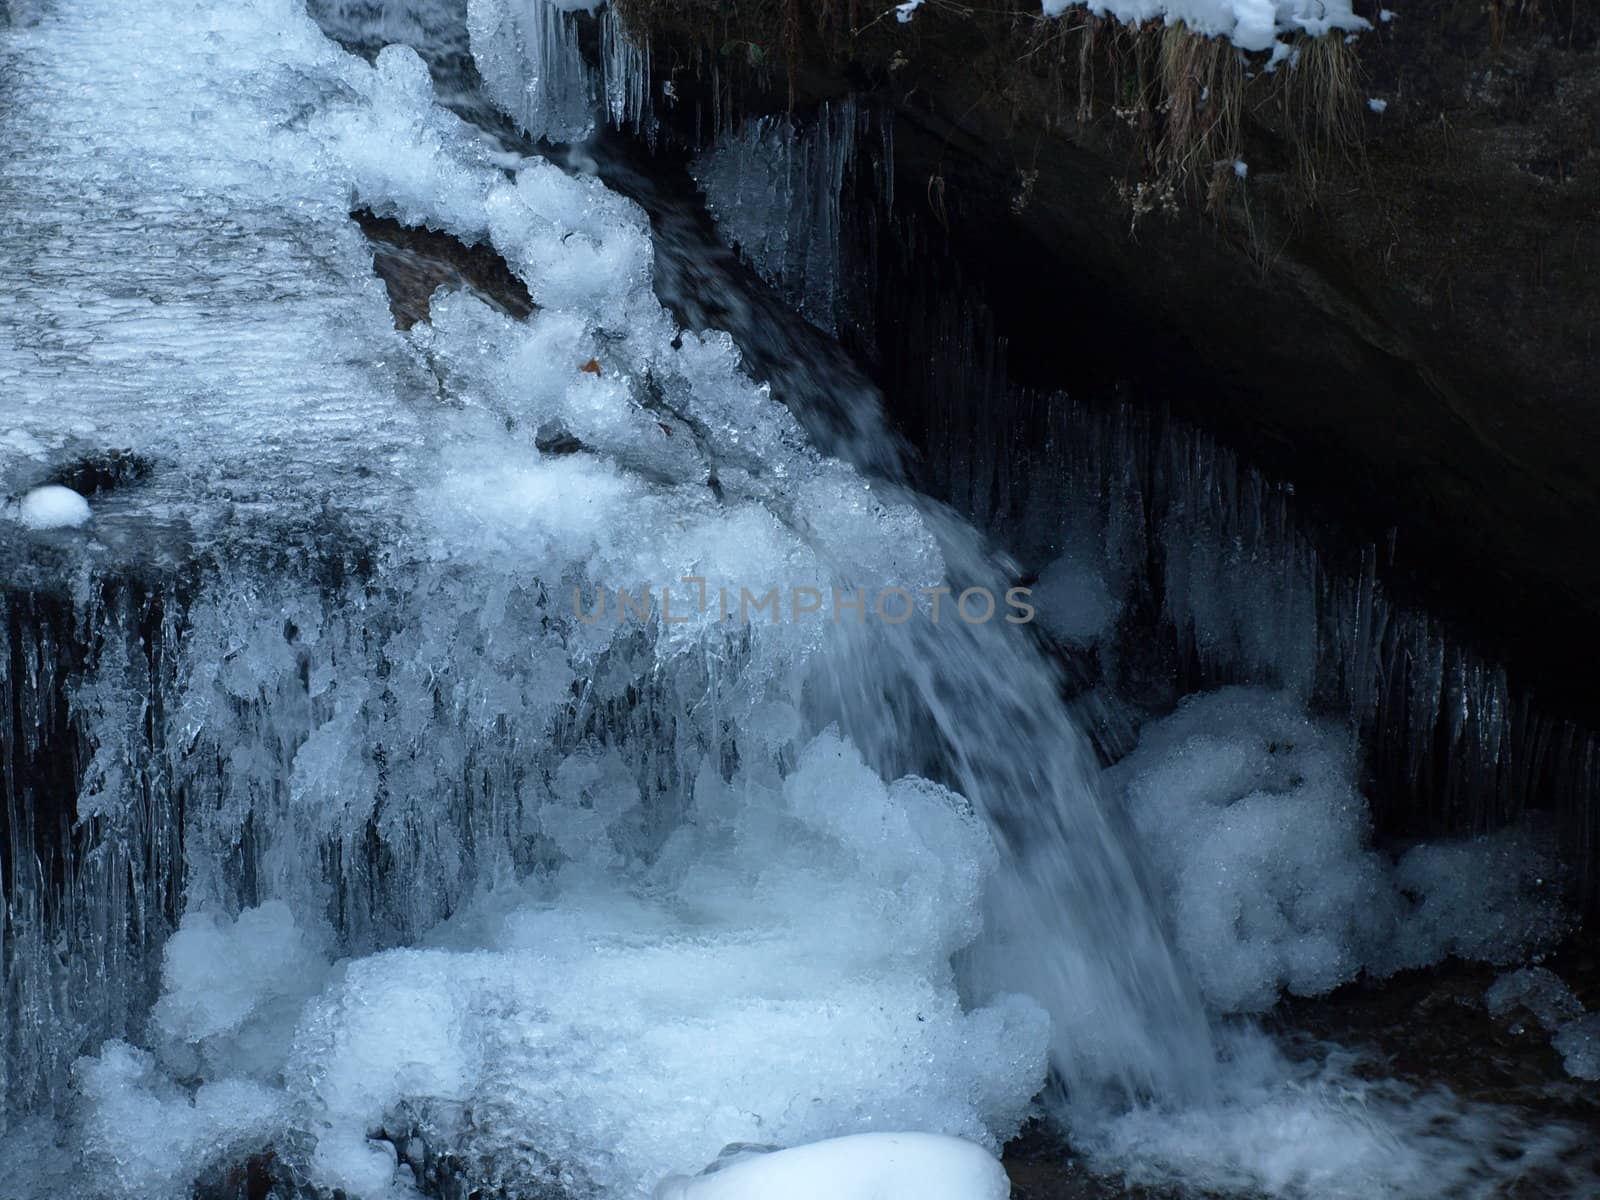 Flash freeze by northwoodsphoto